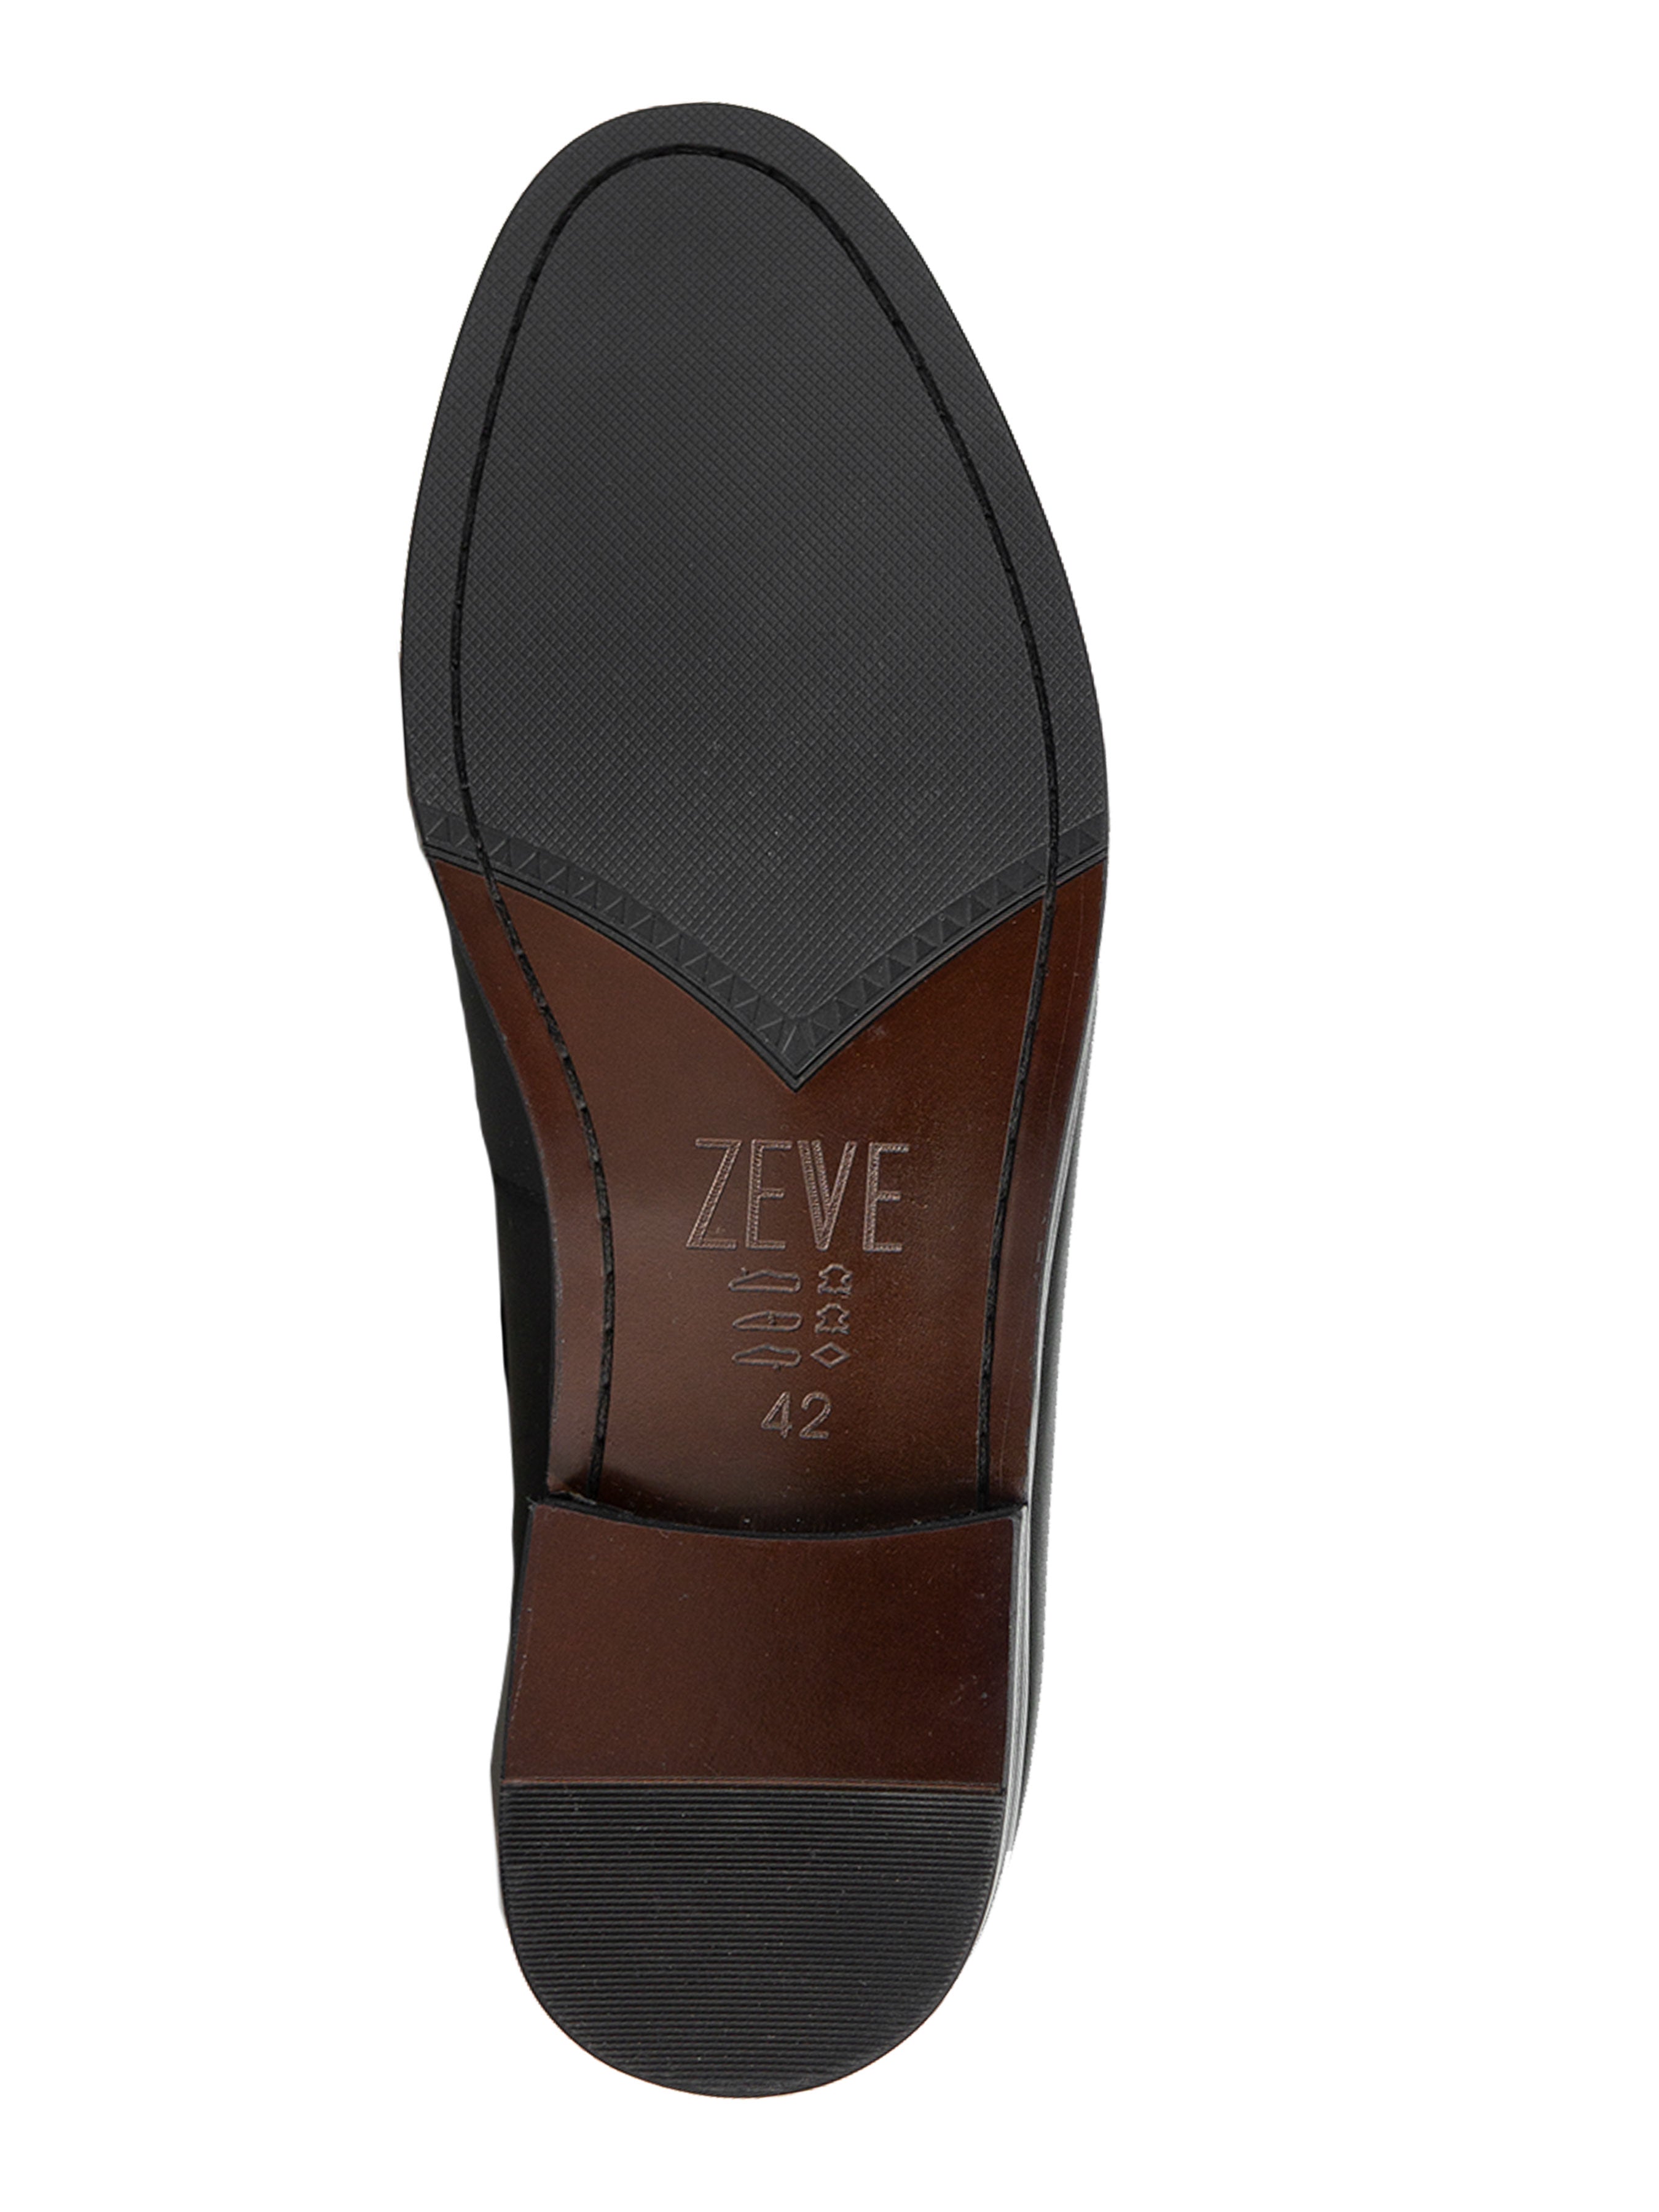 Fringe Ribbon Loafer - Khakis with Tassel (Hand Painted Patina) - Zeve Shoes